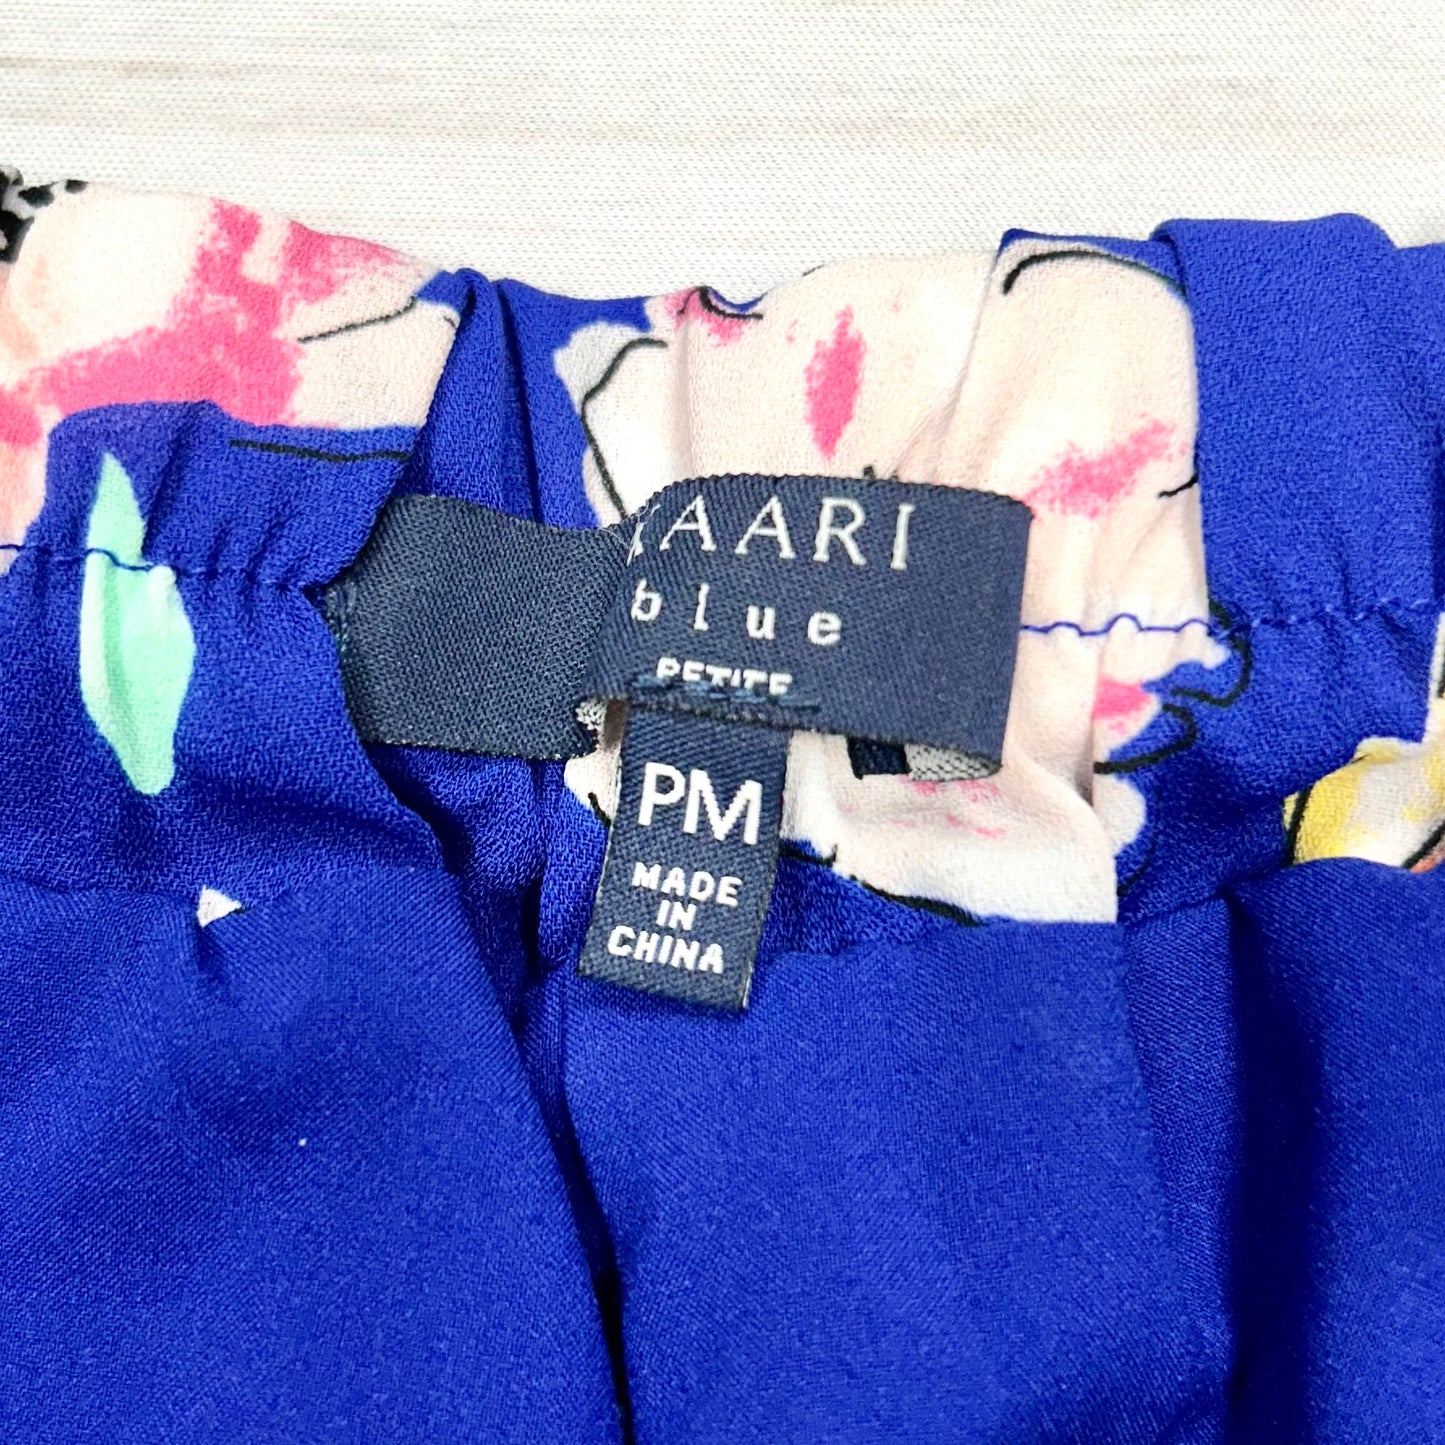 Shorts By Kaari Blue  Size: Mp